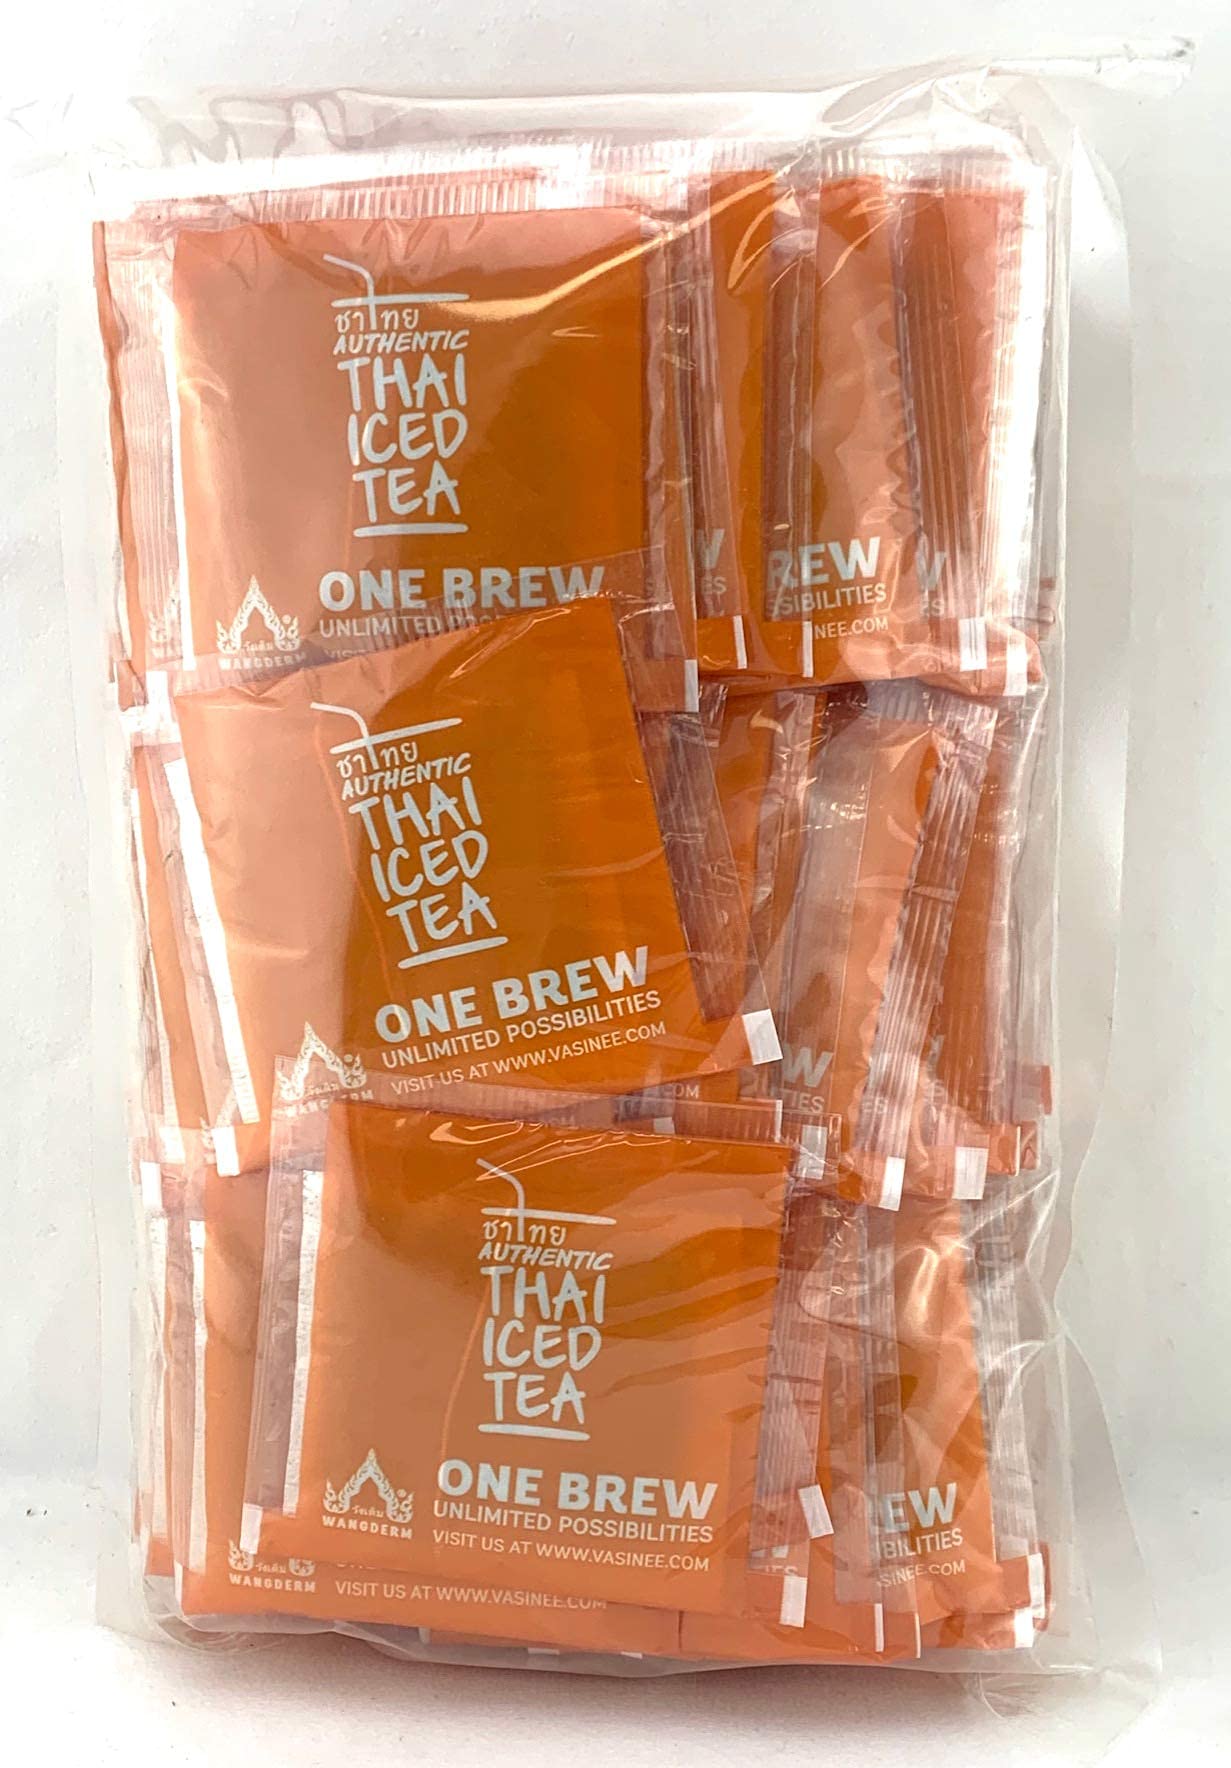 Authentic Thai Iced Tea Family Value Size 70 Bags 8.64oz (245g) By Wang Derm